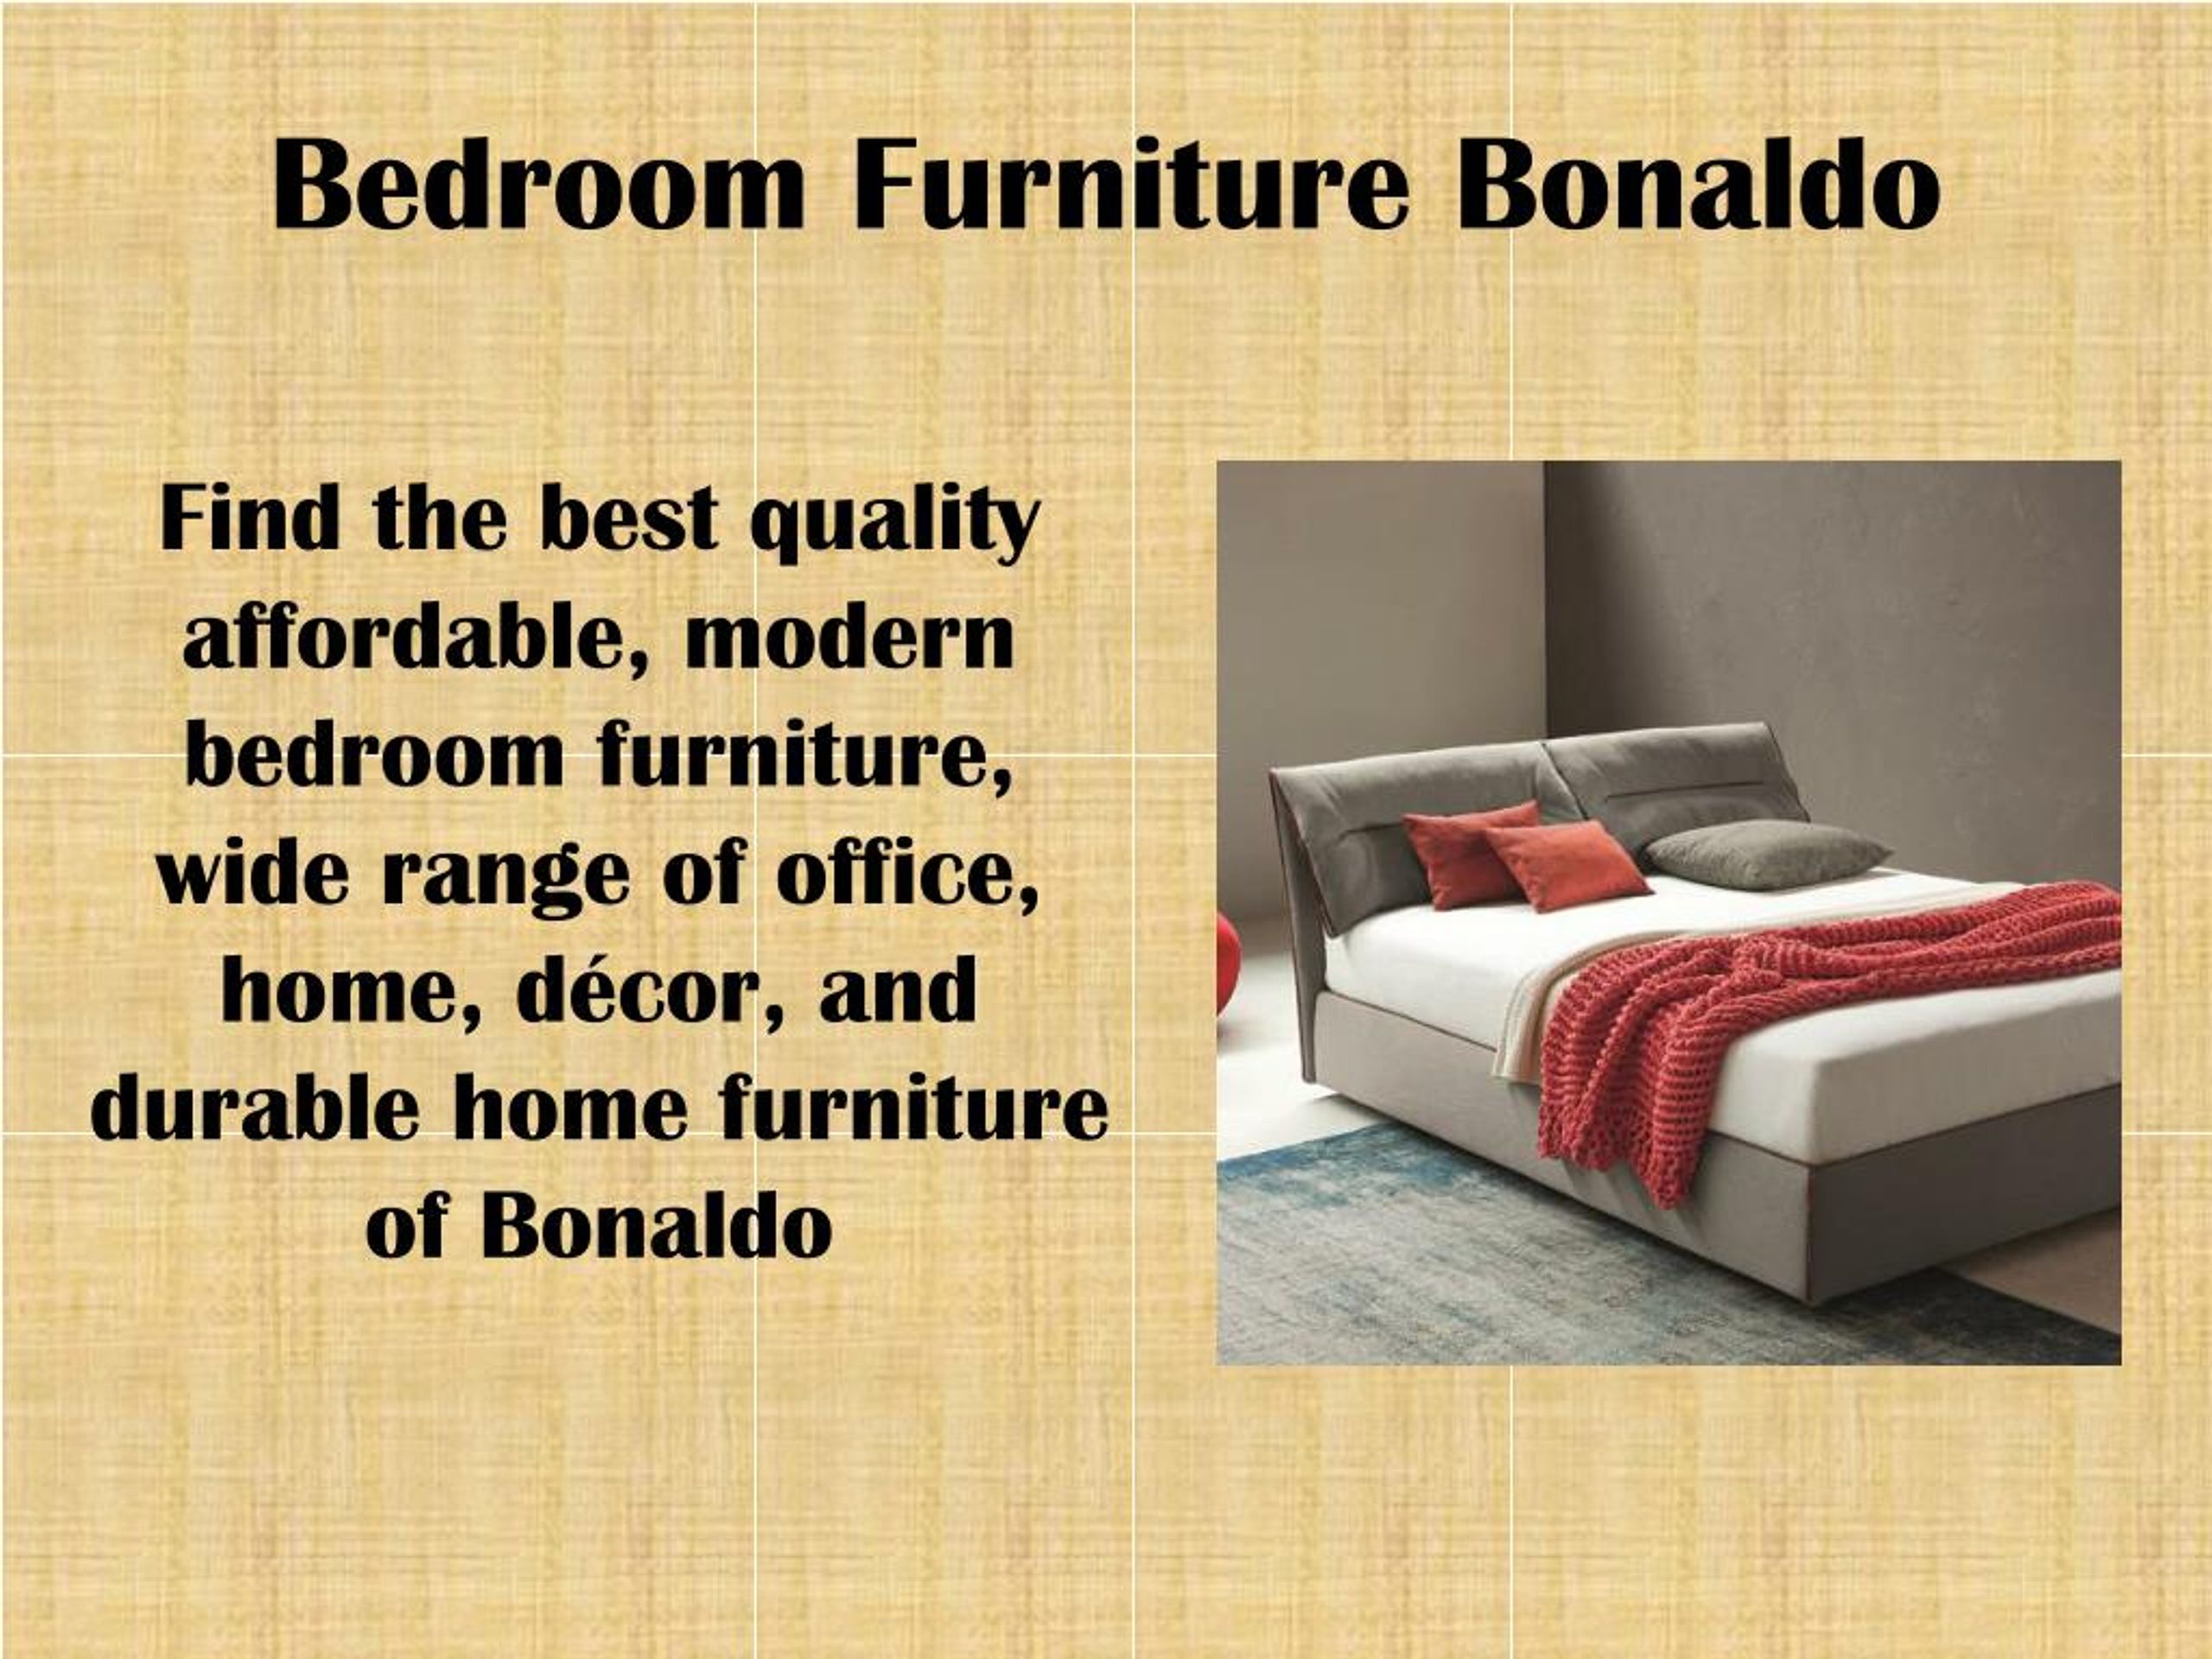 Ppt Bedroom Furniture Bonaldo Powerpoint Presentation Free